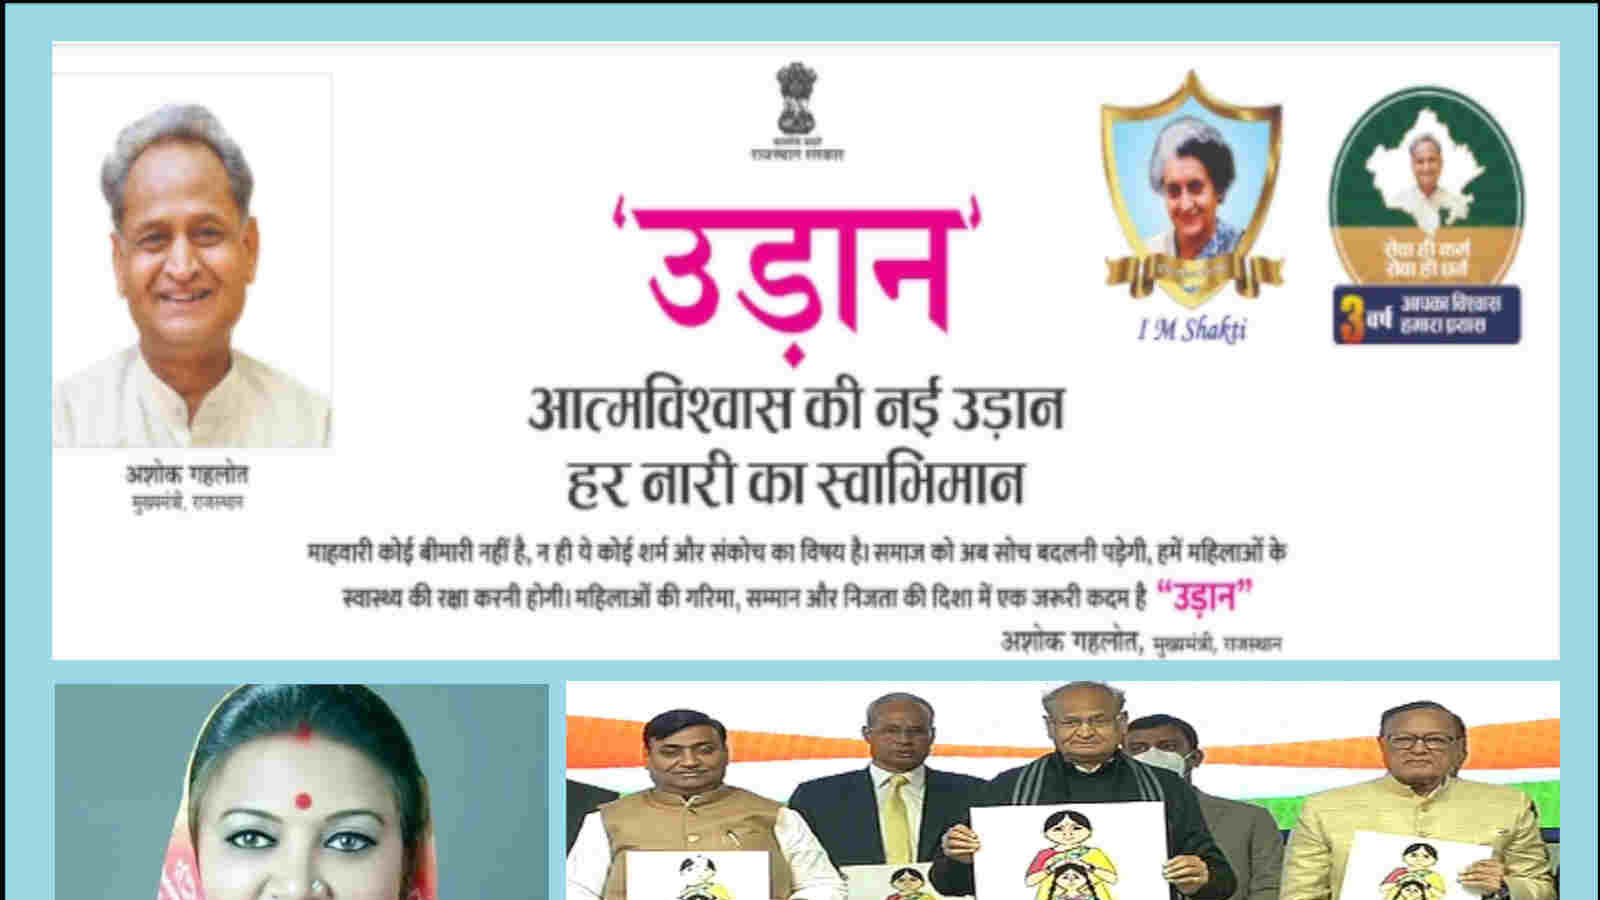 Udaan Gehlot government to be give free sanitary napkins to 1 crore 20 lakh women and girls in Rajasthan rjsr - Rajasthan Ki Udaan: राजस्थान में 1.20 करोड़ महिलाओं-बालिकाओं को मिलेंगे मुफ्त